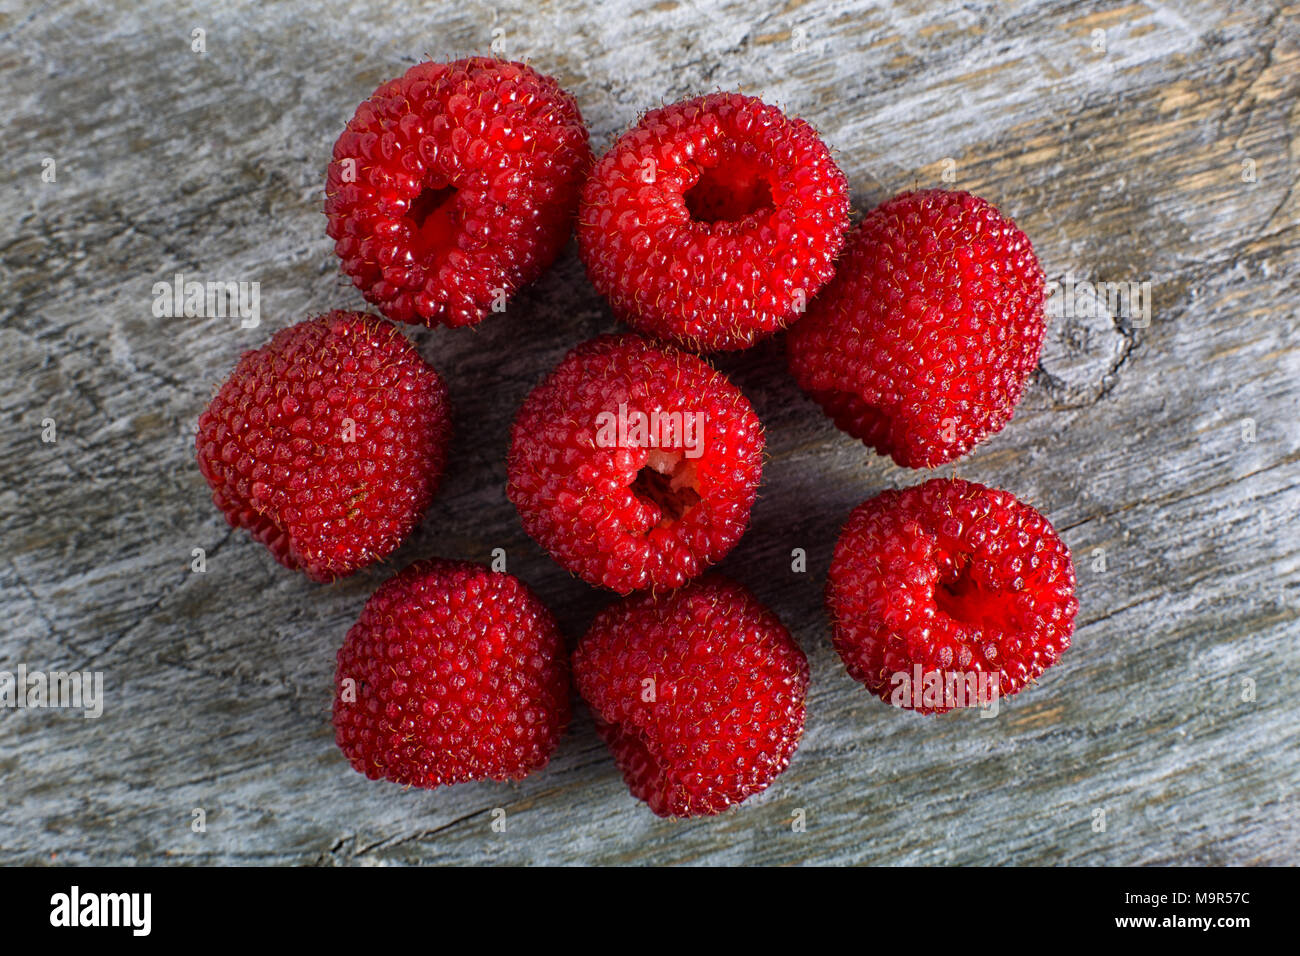 Ecuadorian raspberry variety closeup on rustic wood surface Stock Photo